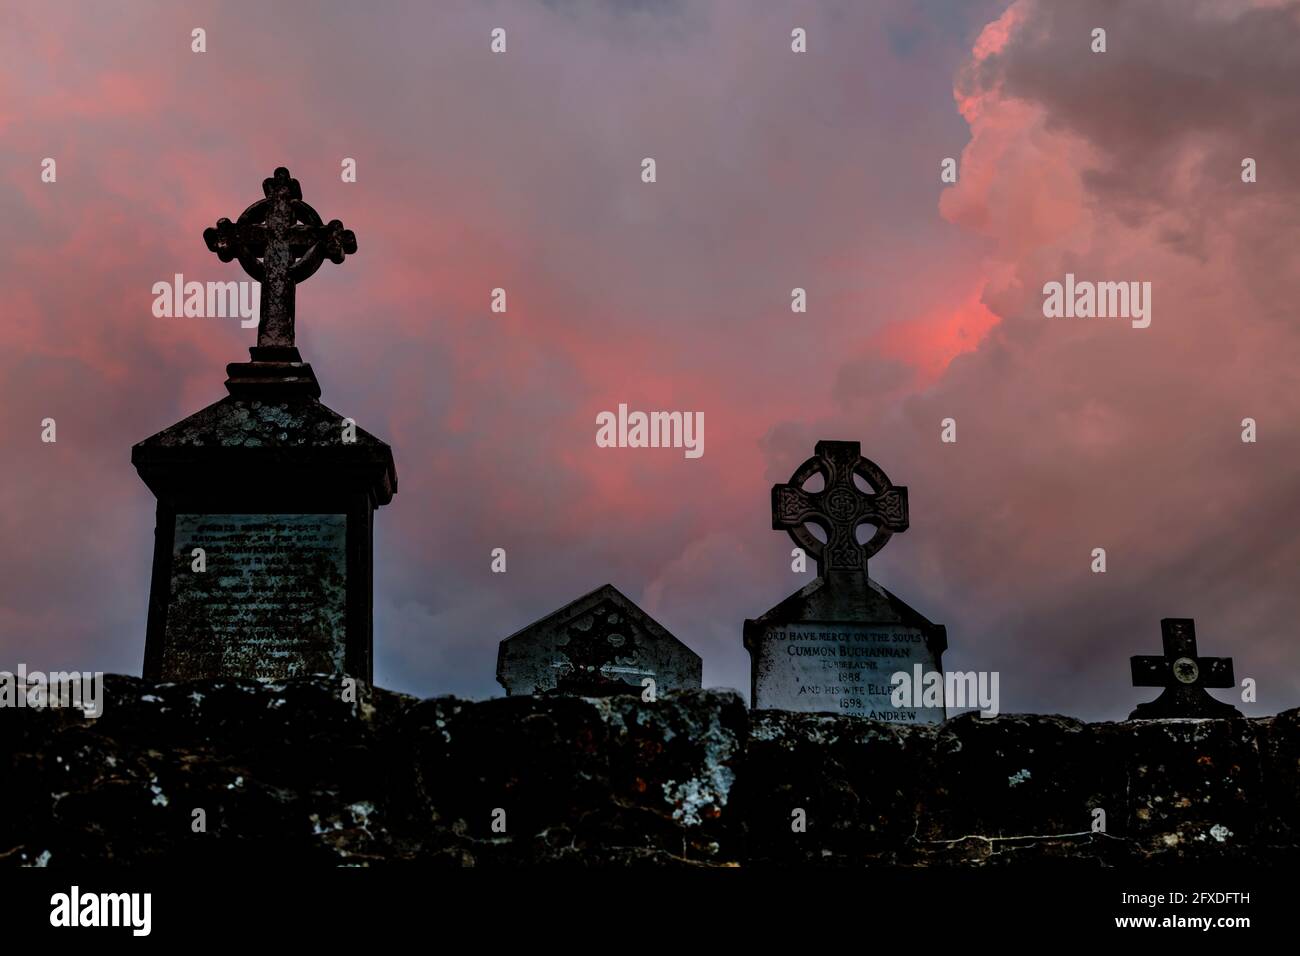 Graveyard  headstone crosses  silhouetted, against a dark stormy reddish sky Stock Photo